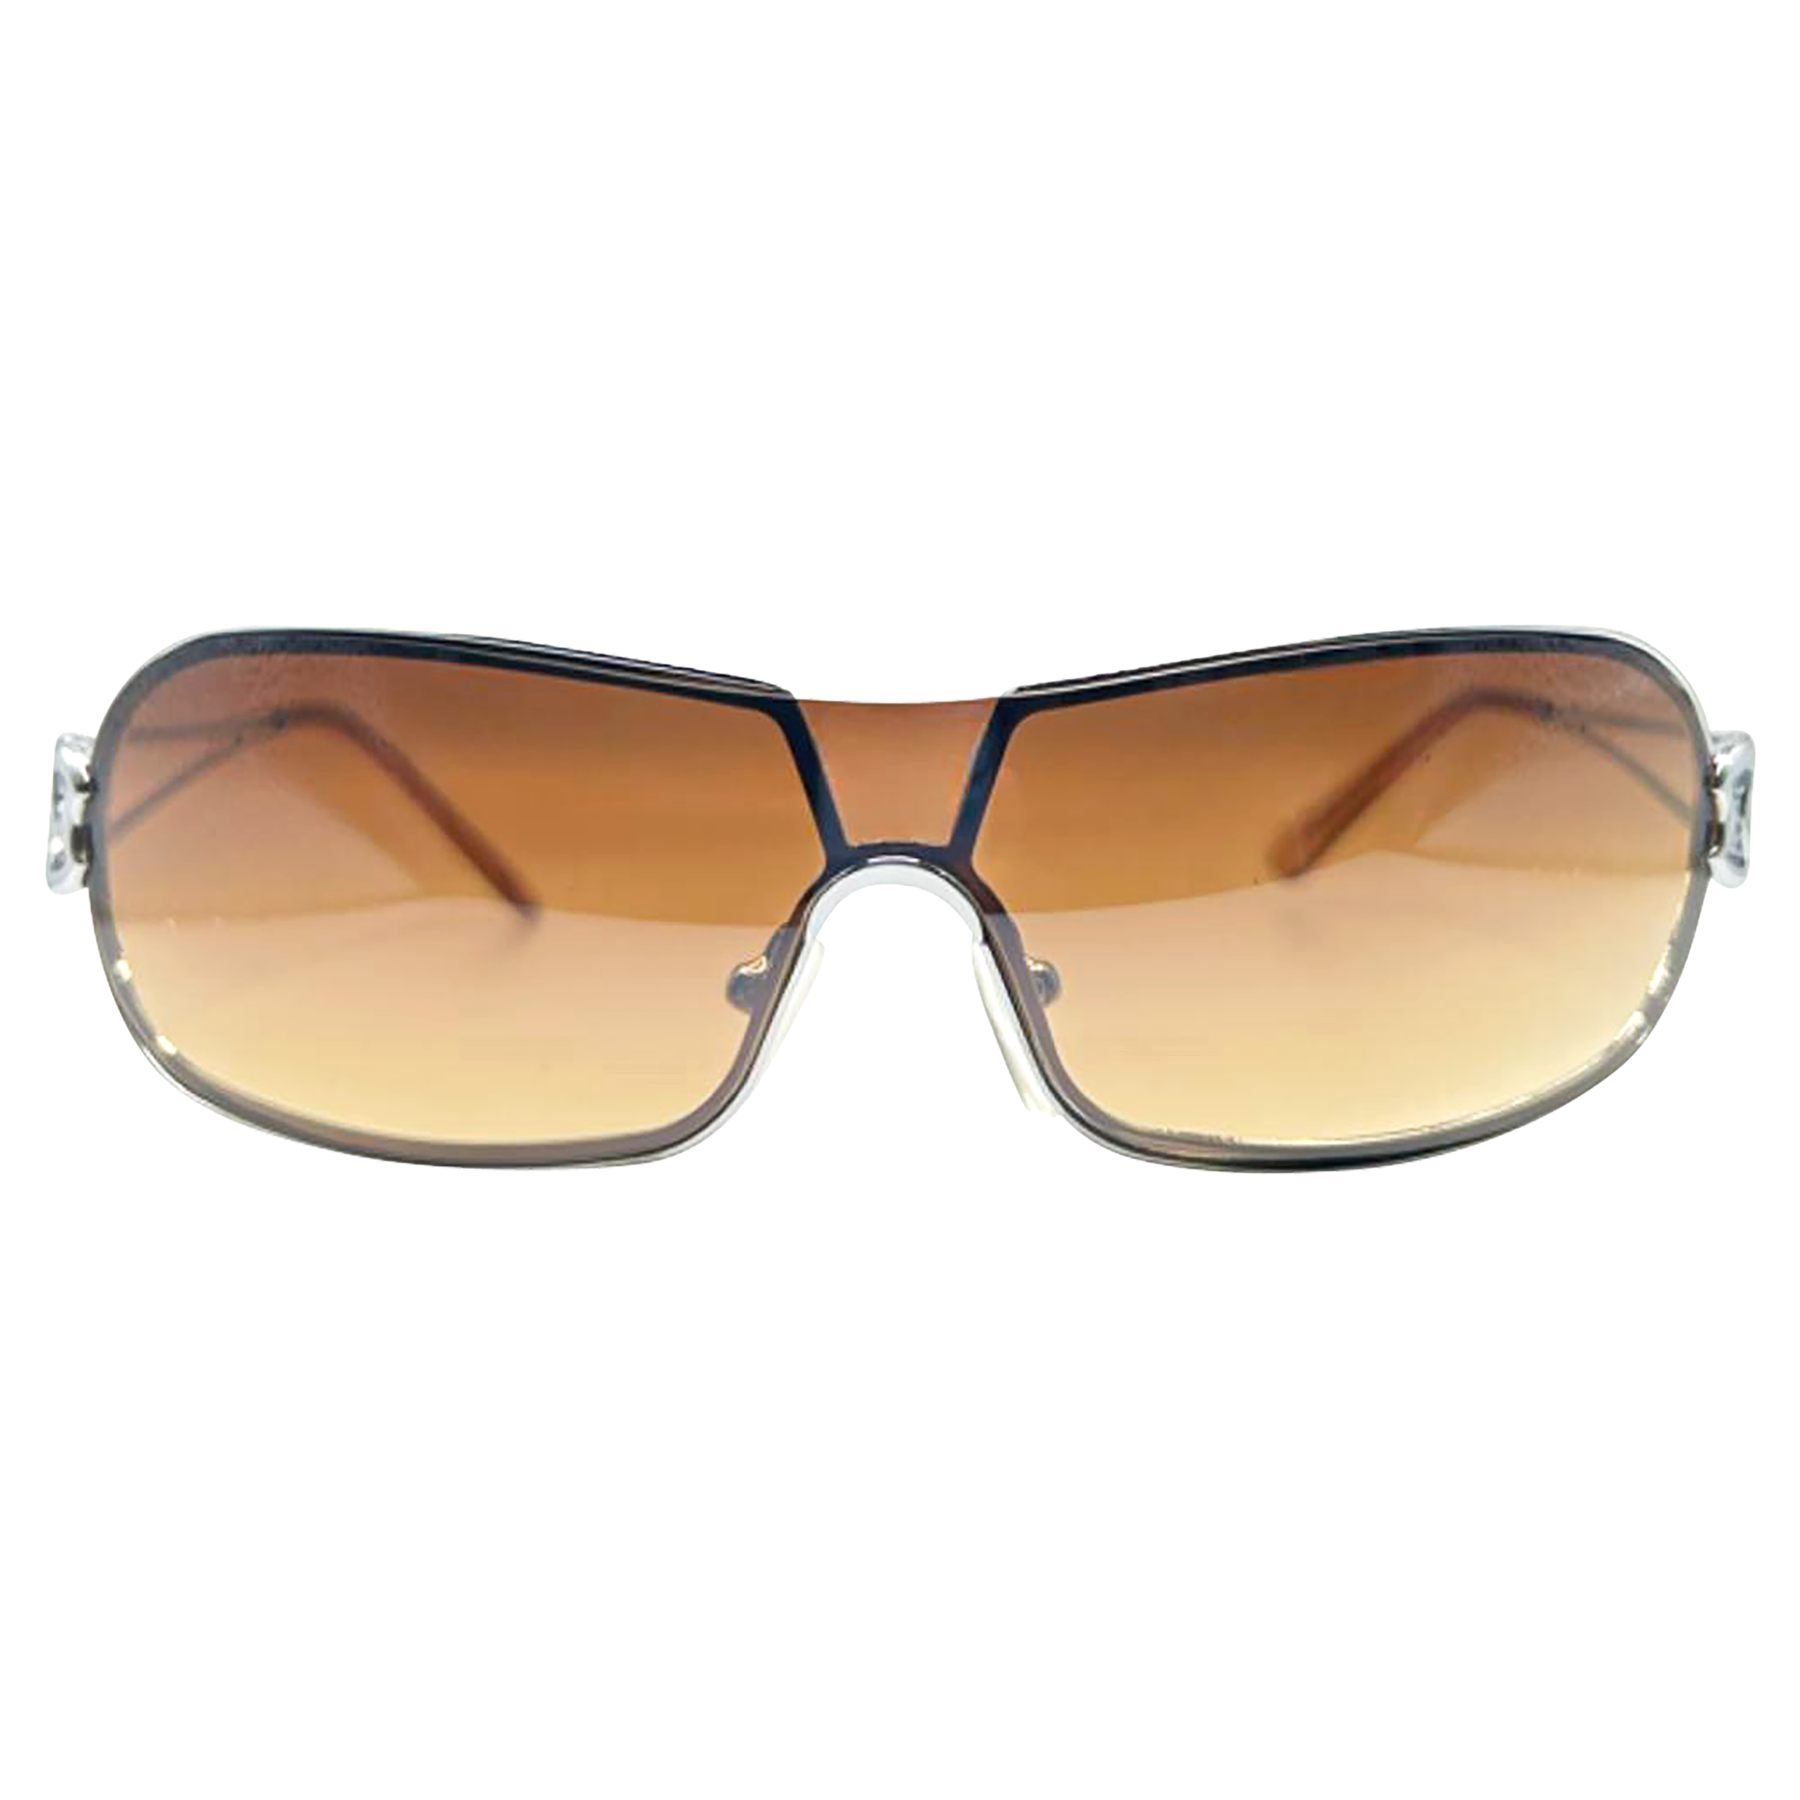 LUCKY CHARM Futuristic Sunglasses